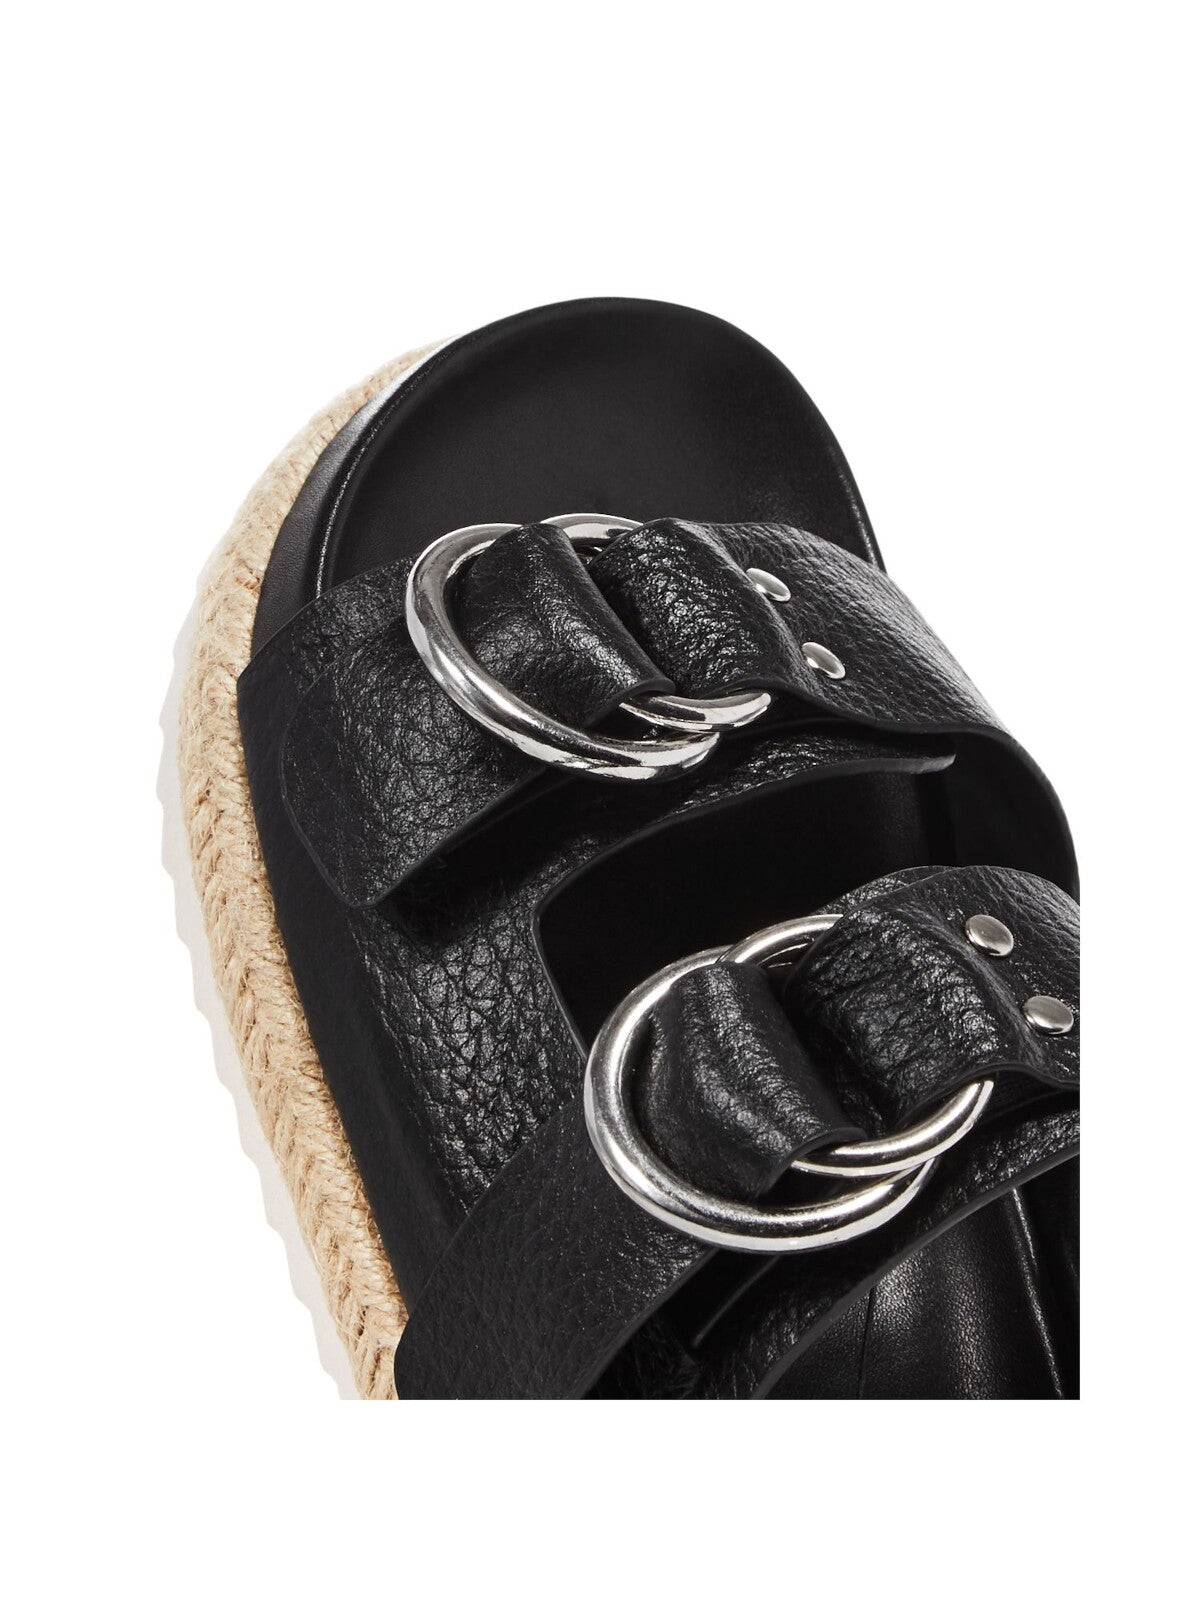 AQUA Womens Black Buckle Accent Studded Kai Round Toe Platform Slip On Leather Espadrille Shoes 6.5 M